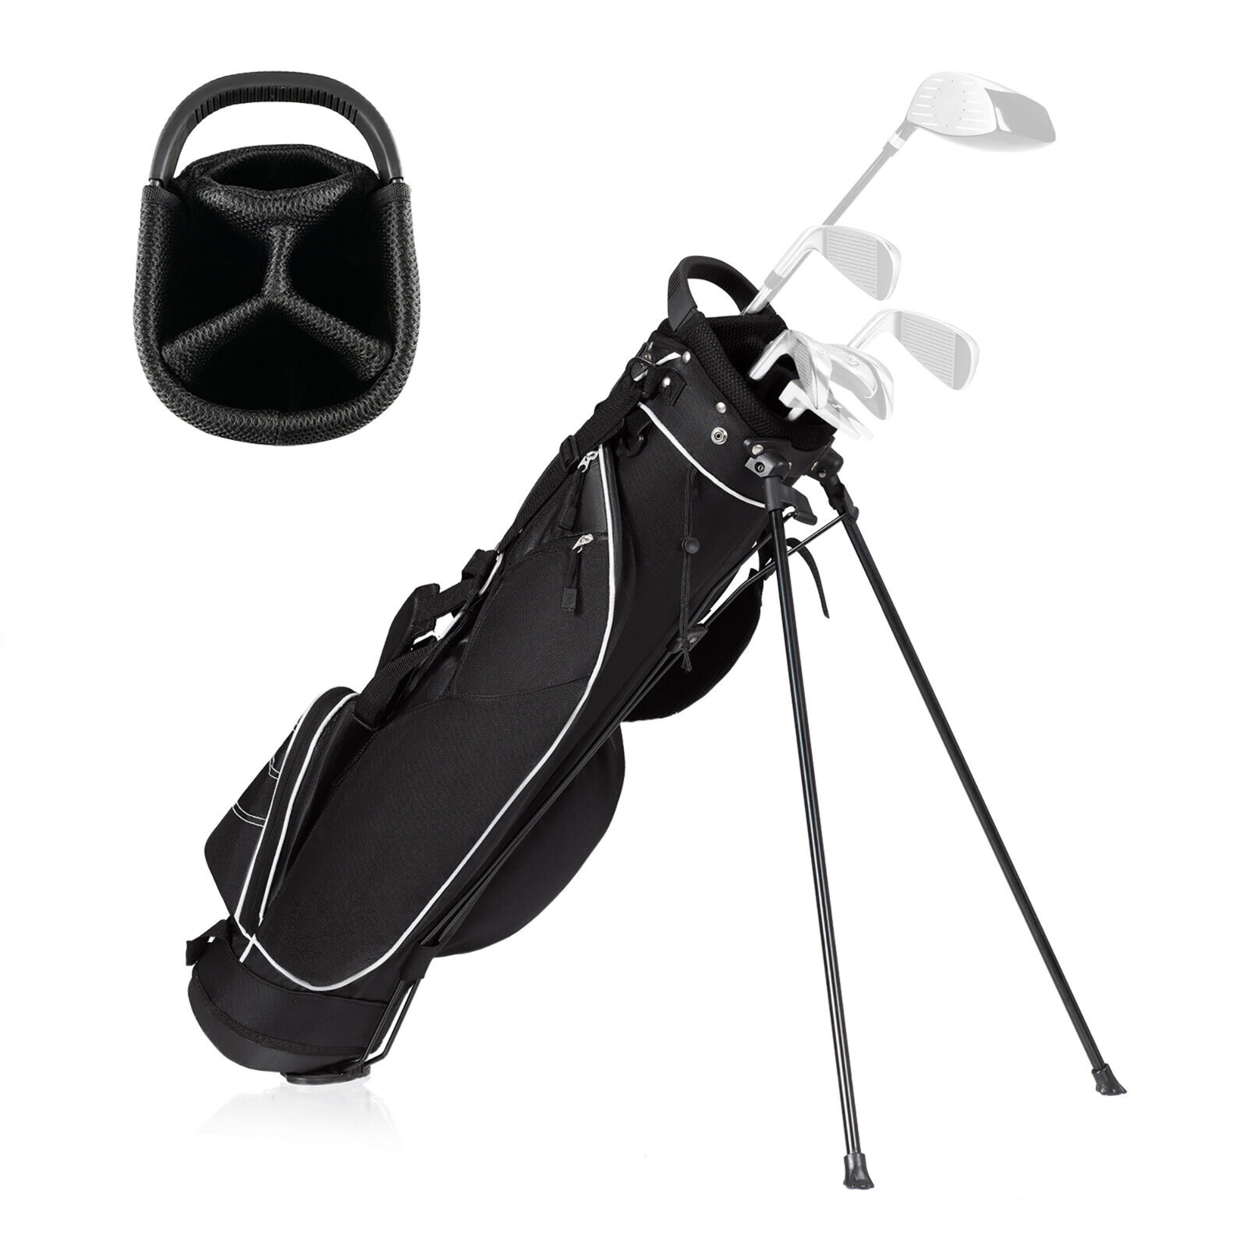 Black Golf Stand Cart Bag Club With Carry Organizer Pockets